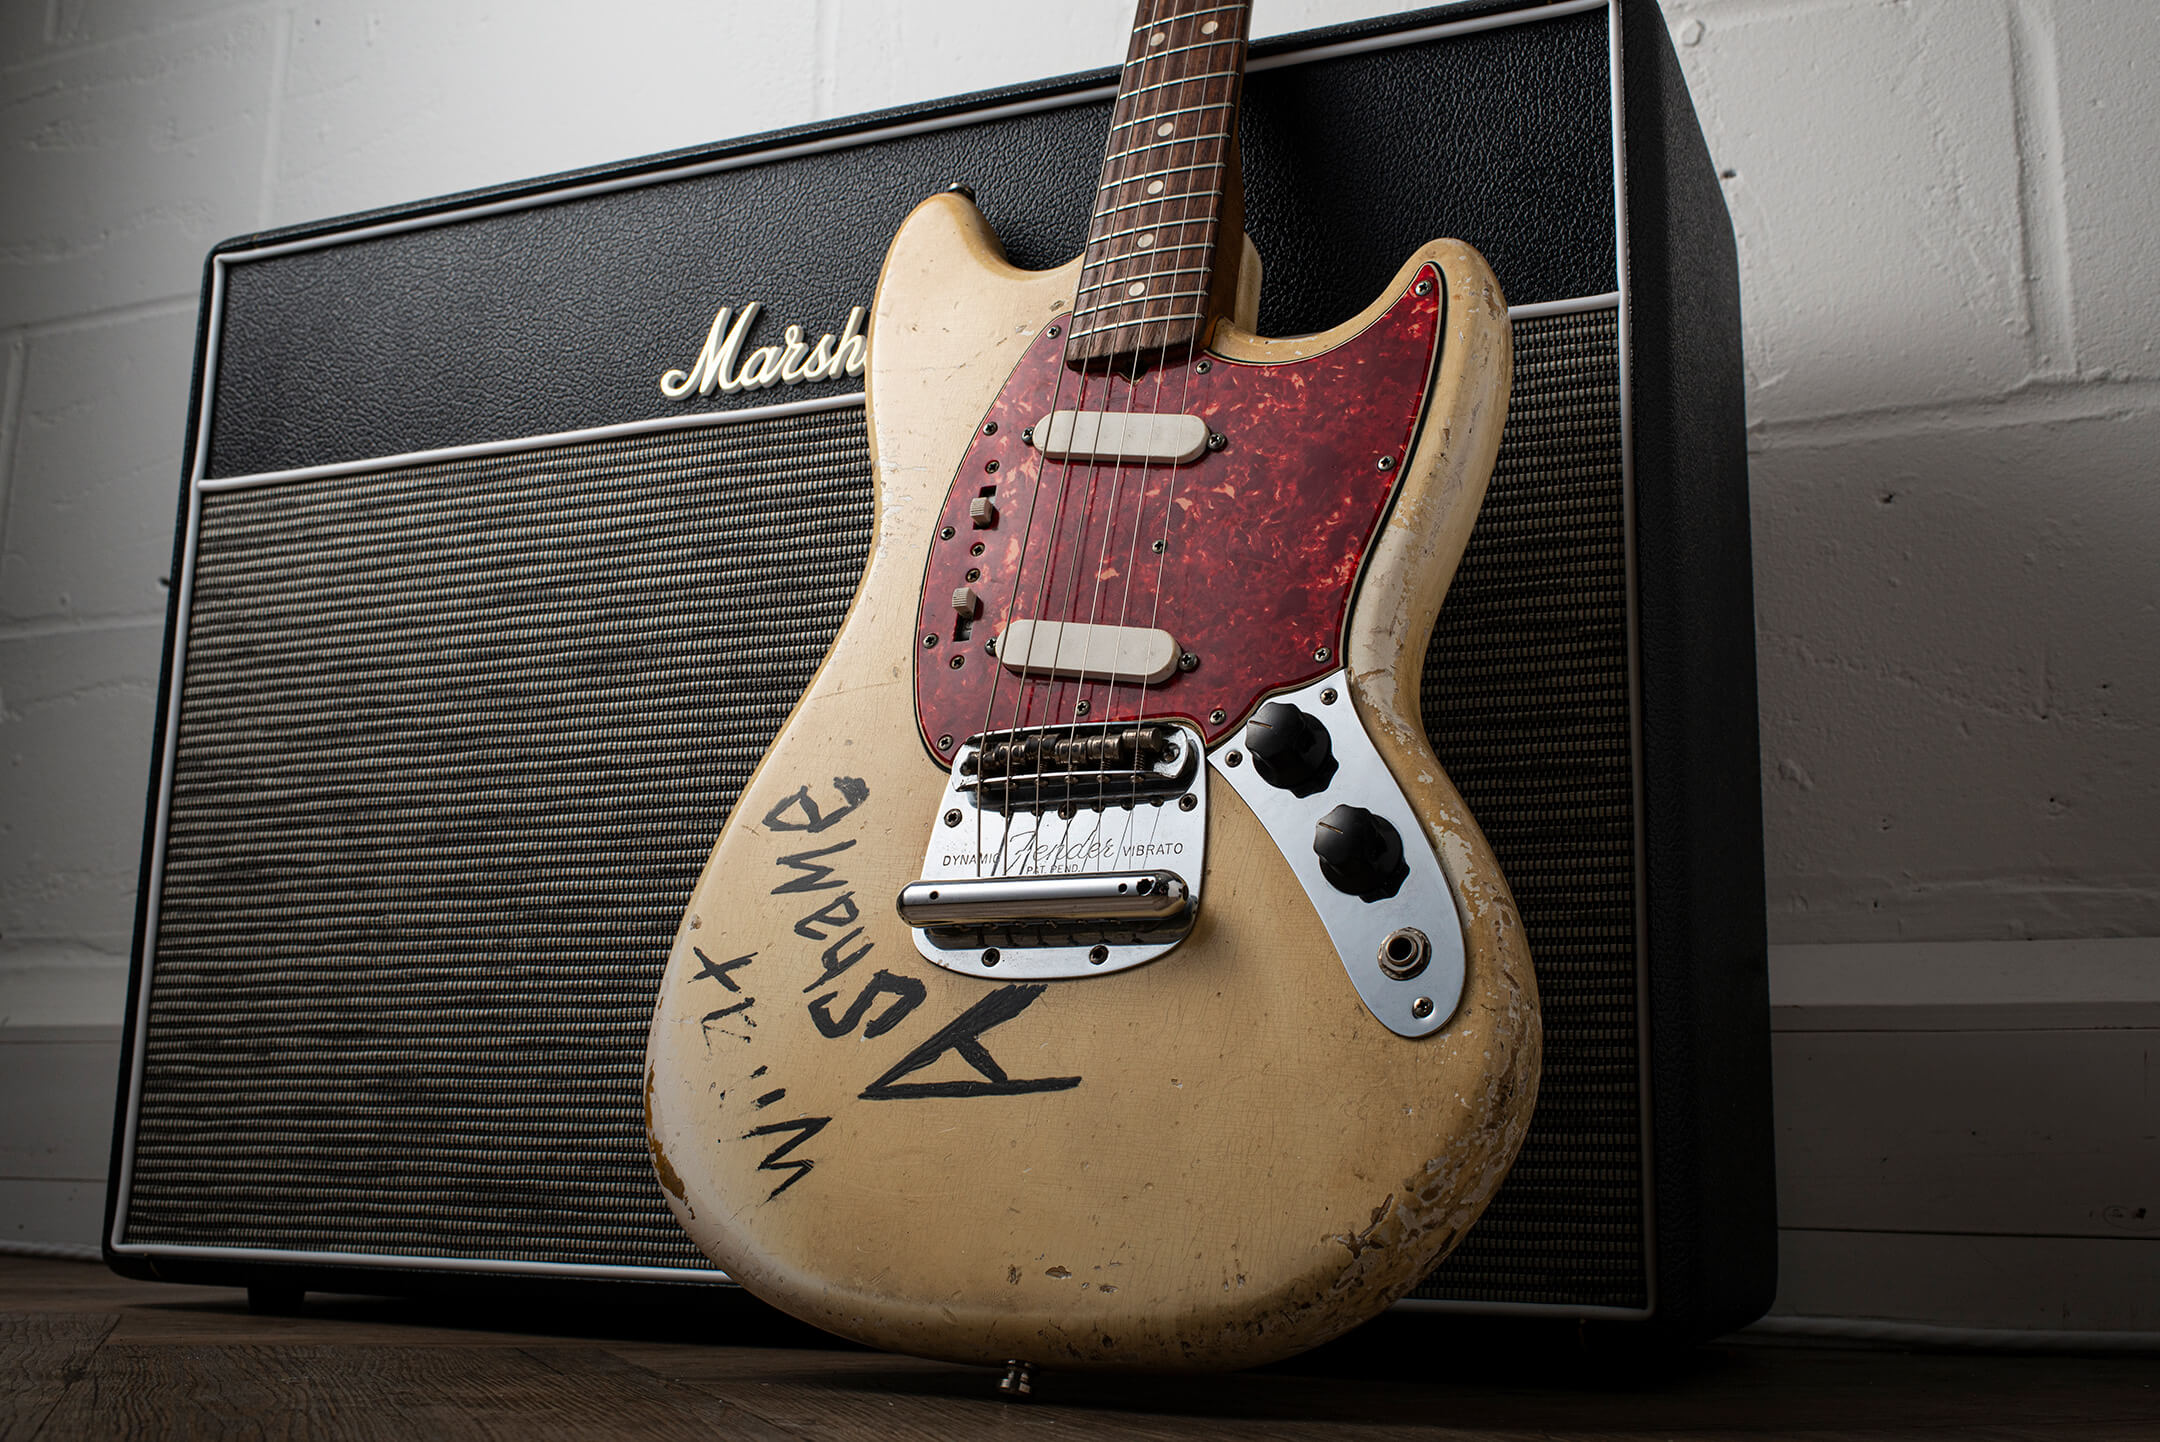 Jamie Oborne's Fender Mustang